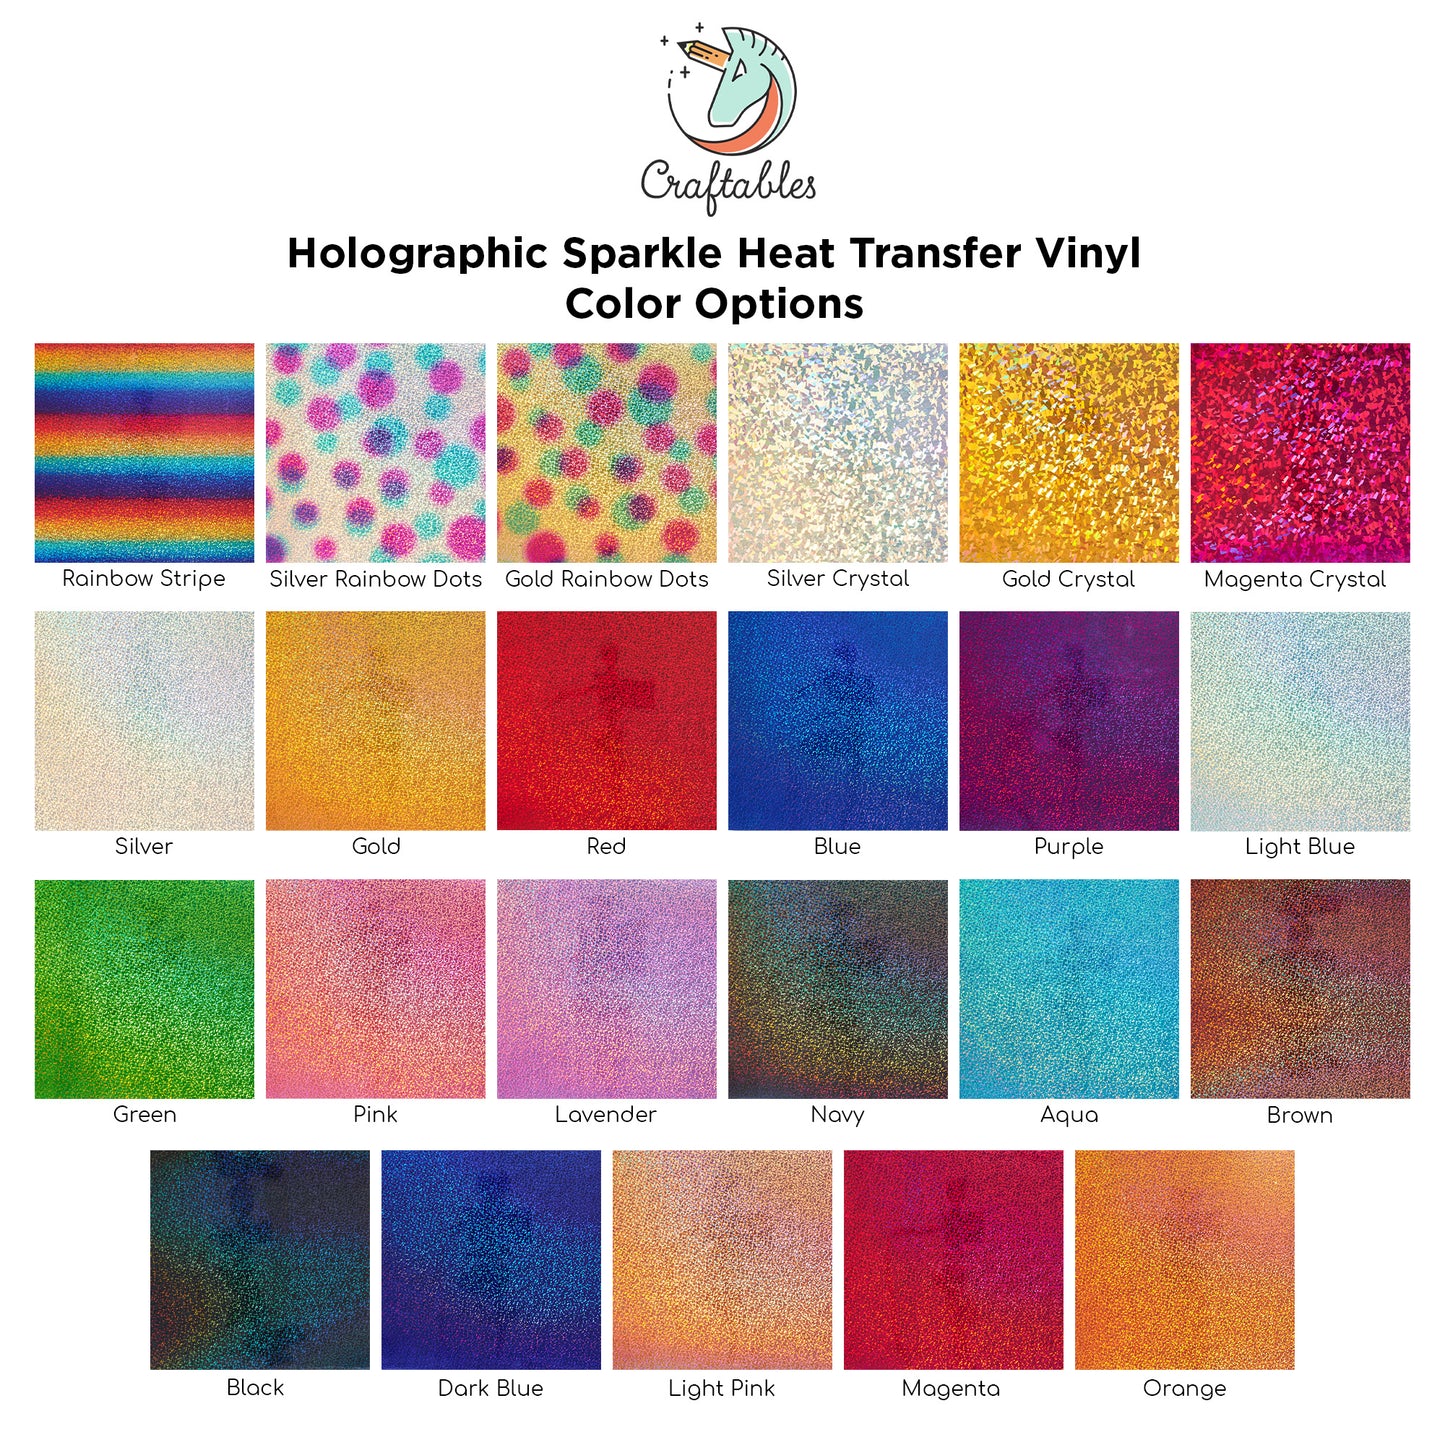 Rainbow Stripe Holographic Sparkle Heat Transfer Vinyl Rolls By Craftables